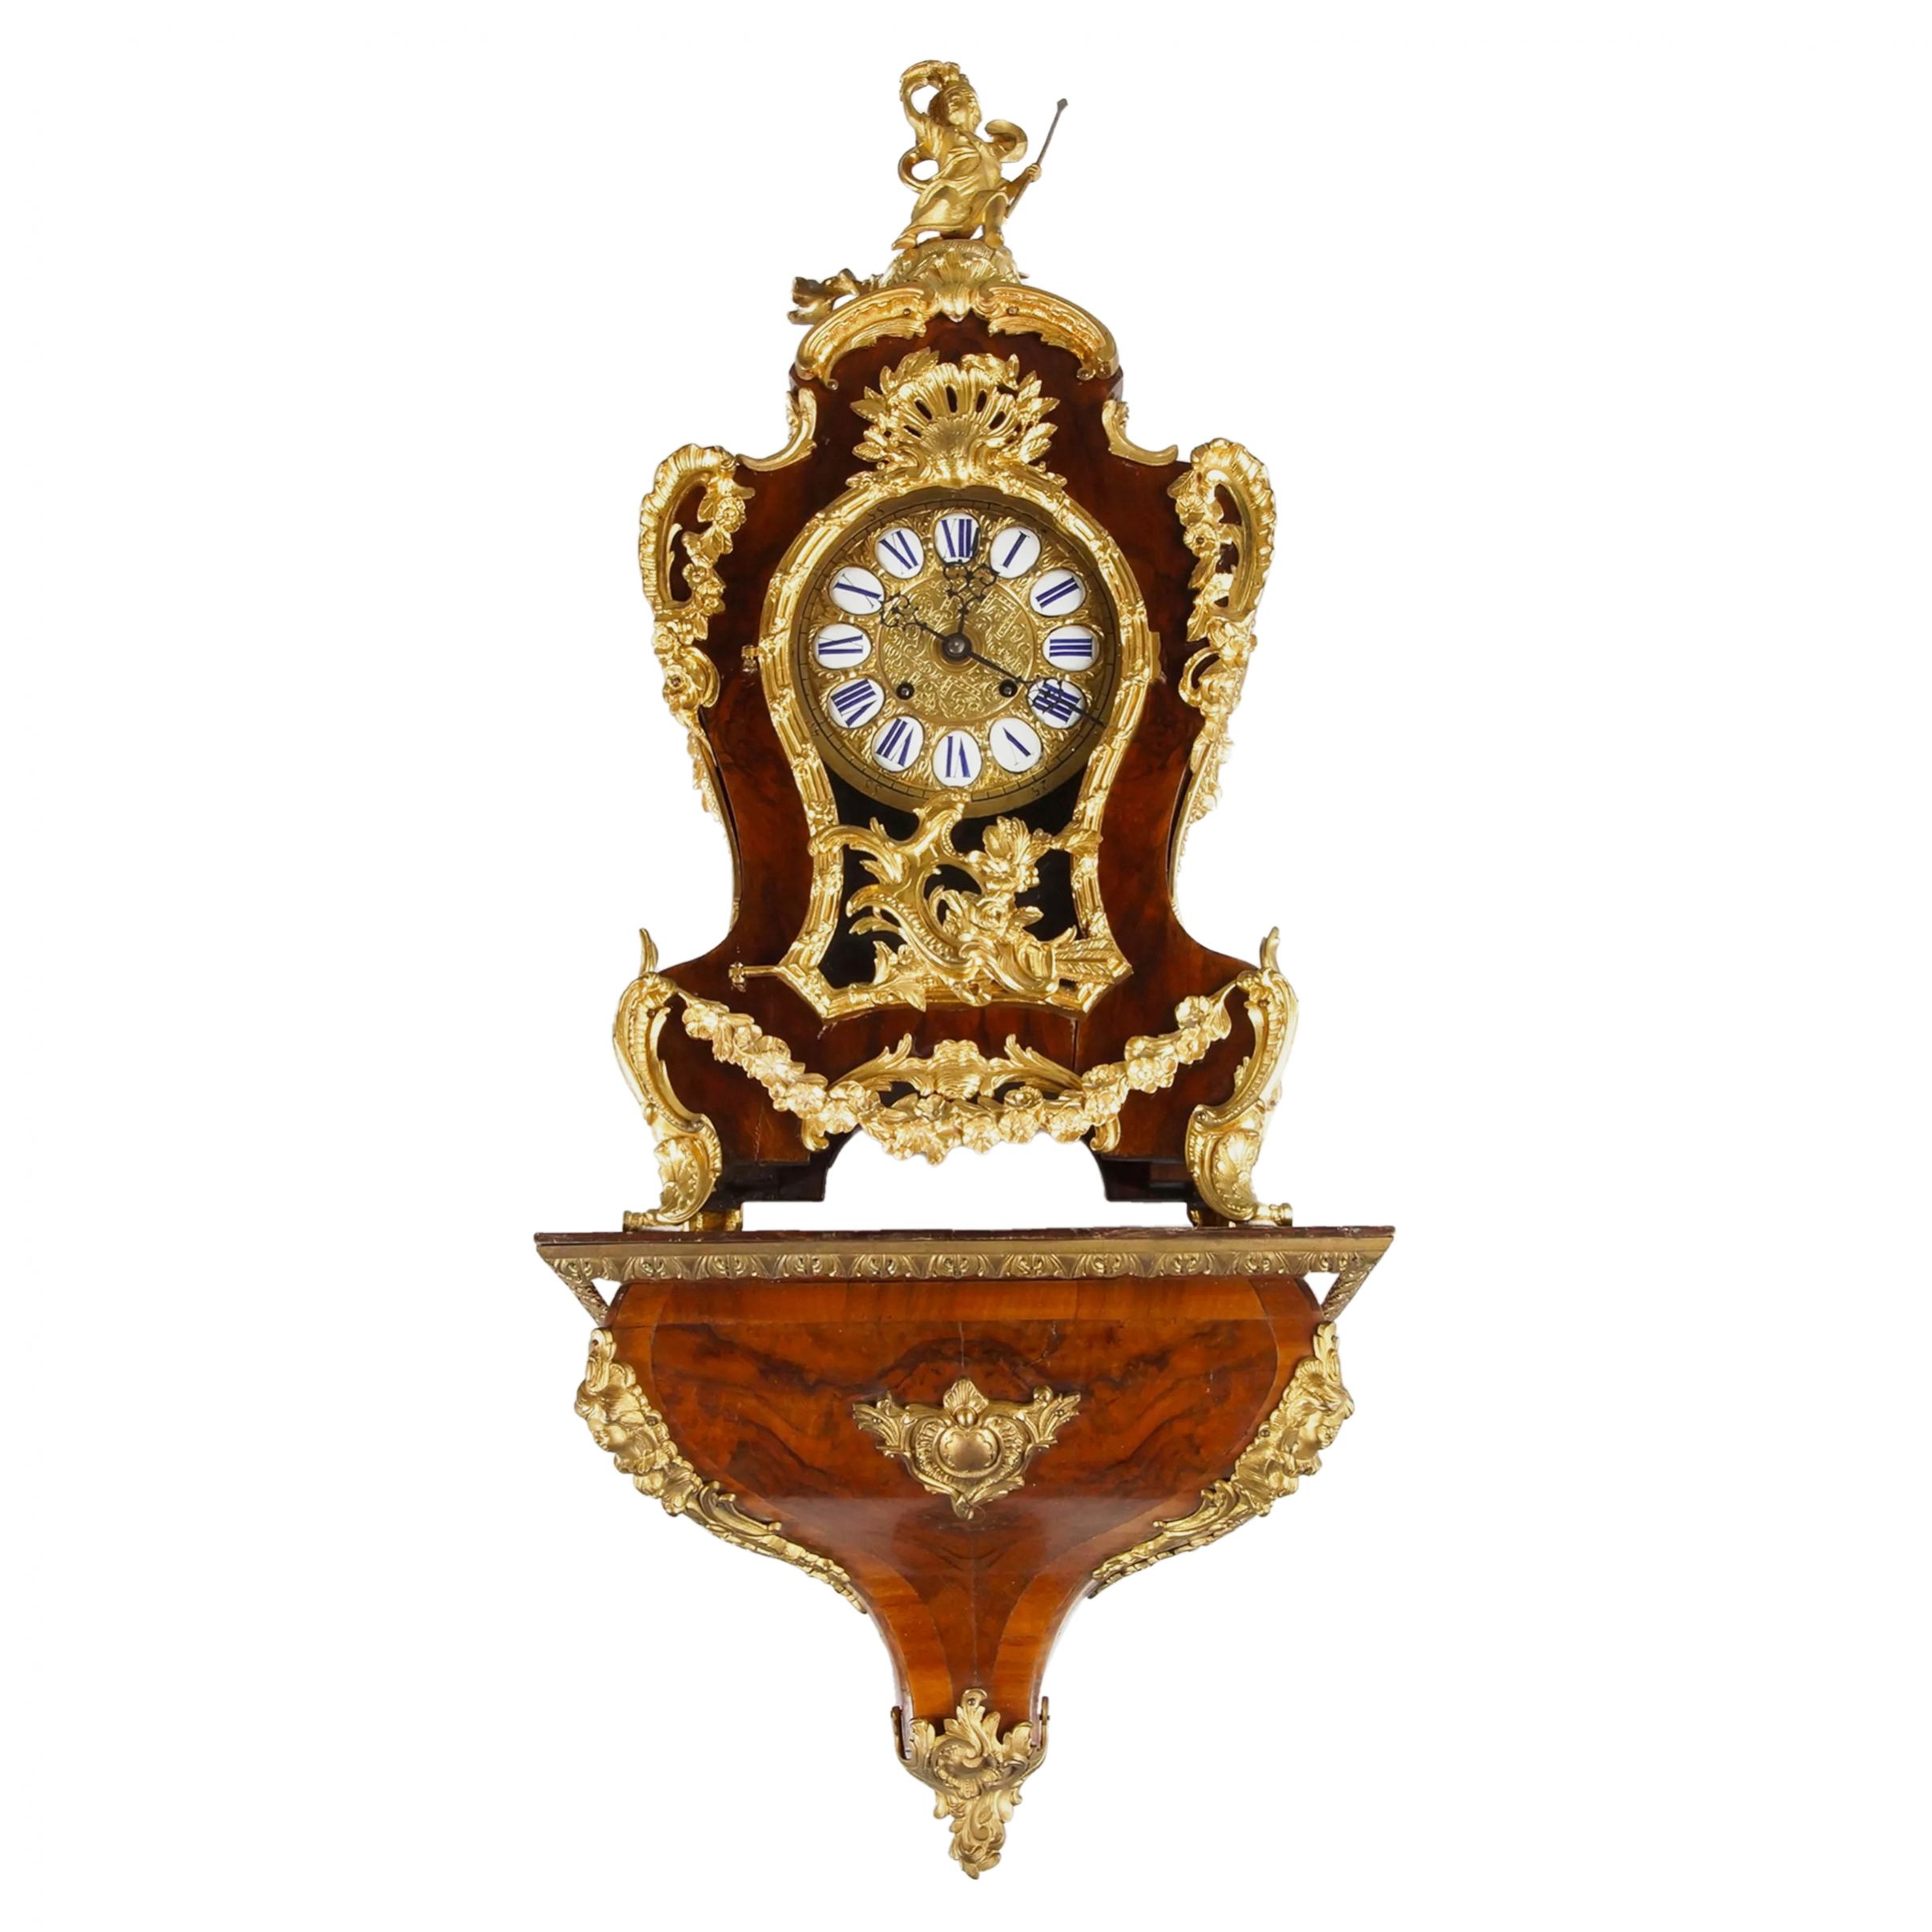 Sienas-pulkstenis-ar-konsoli-rokoko-stila-19-gadsimts-